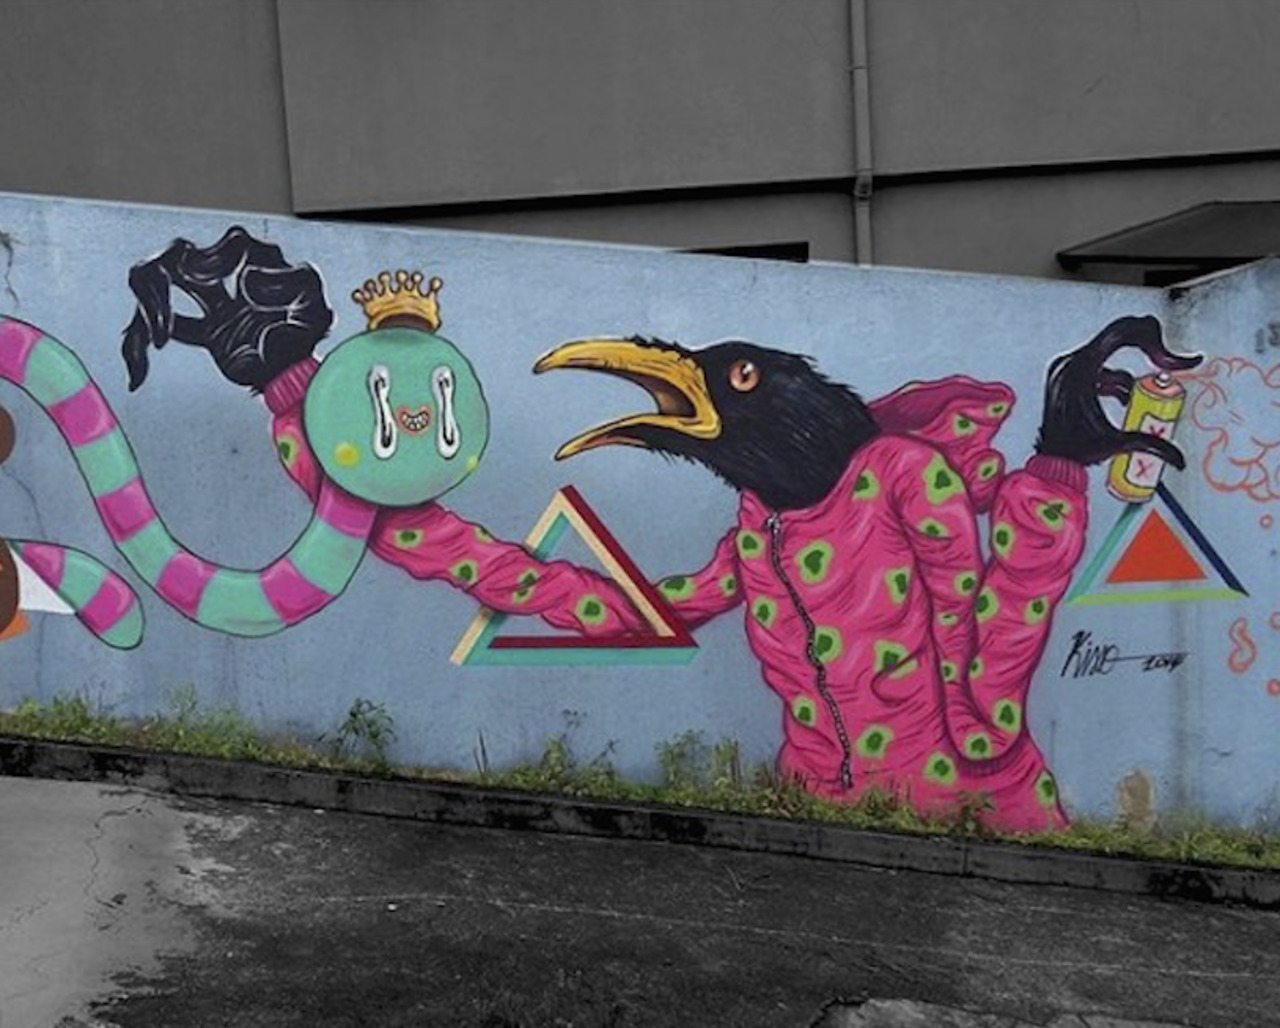 Corvoman Vs King Minhoco #streetart mural via @StreetArtSP http://streetartsp.com.br/artista/kisso/compartilhado-por-mondokisso-em-sep-17-2015-1133/ #graffiti #urbanart #art #murals http://t.co/u1iZKP8fZN